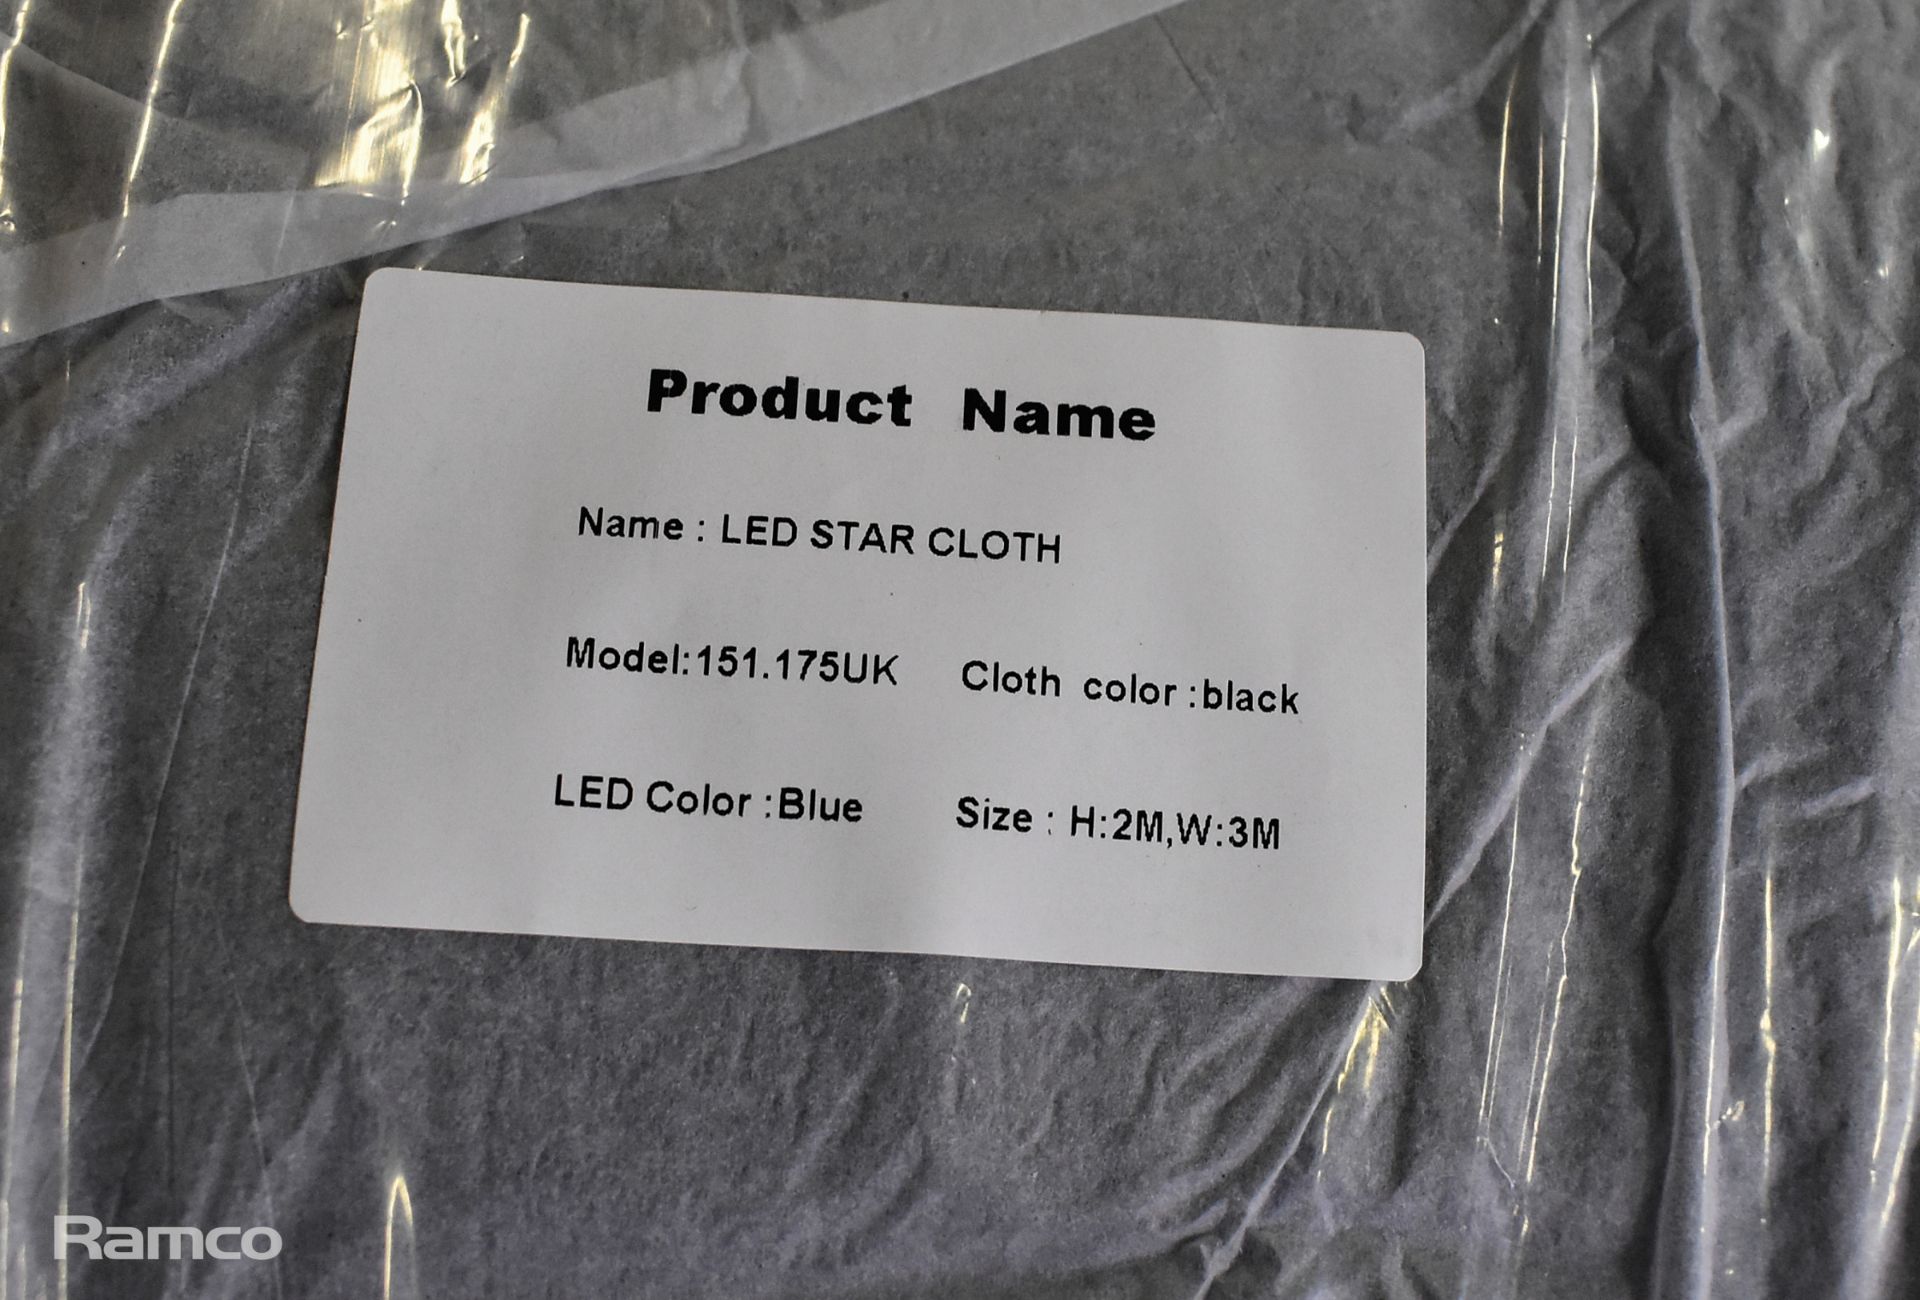 QTX LED starclock black with 96 blue LEDs - 3m x 2m - Image 10 of 13